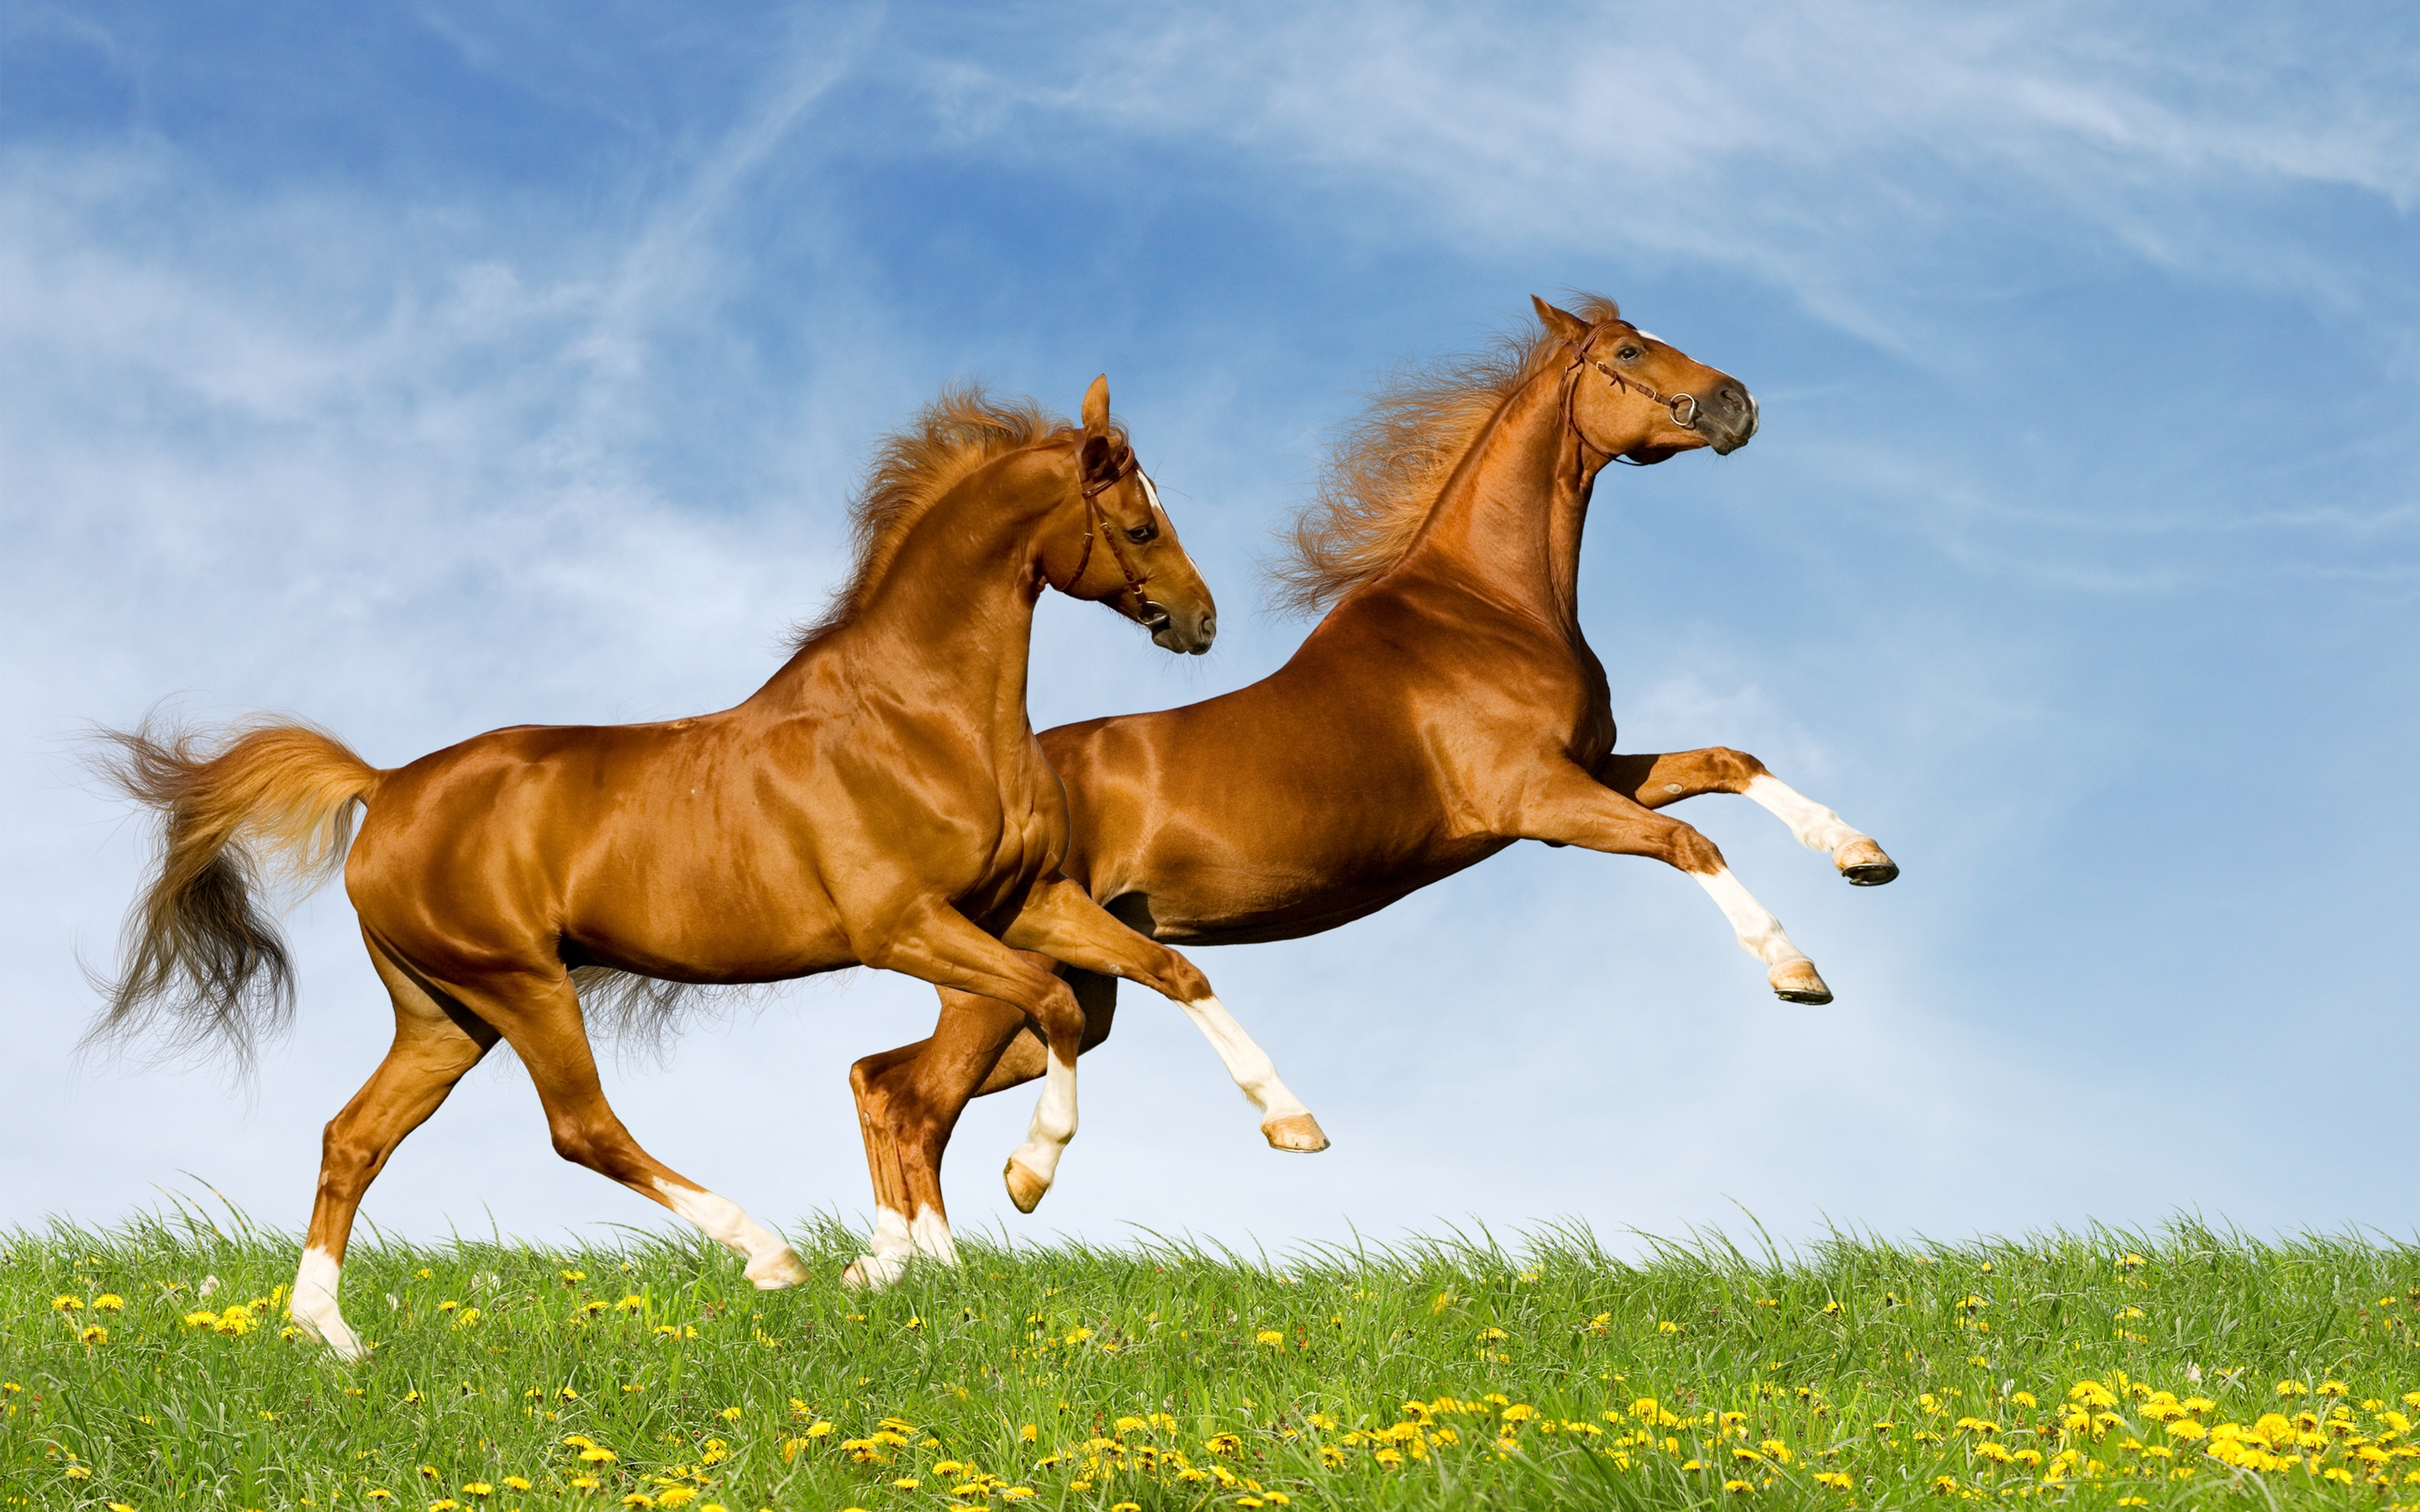 Horses Running for 2880 x 1800 Retina Display resolution